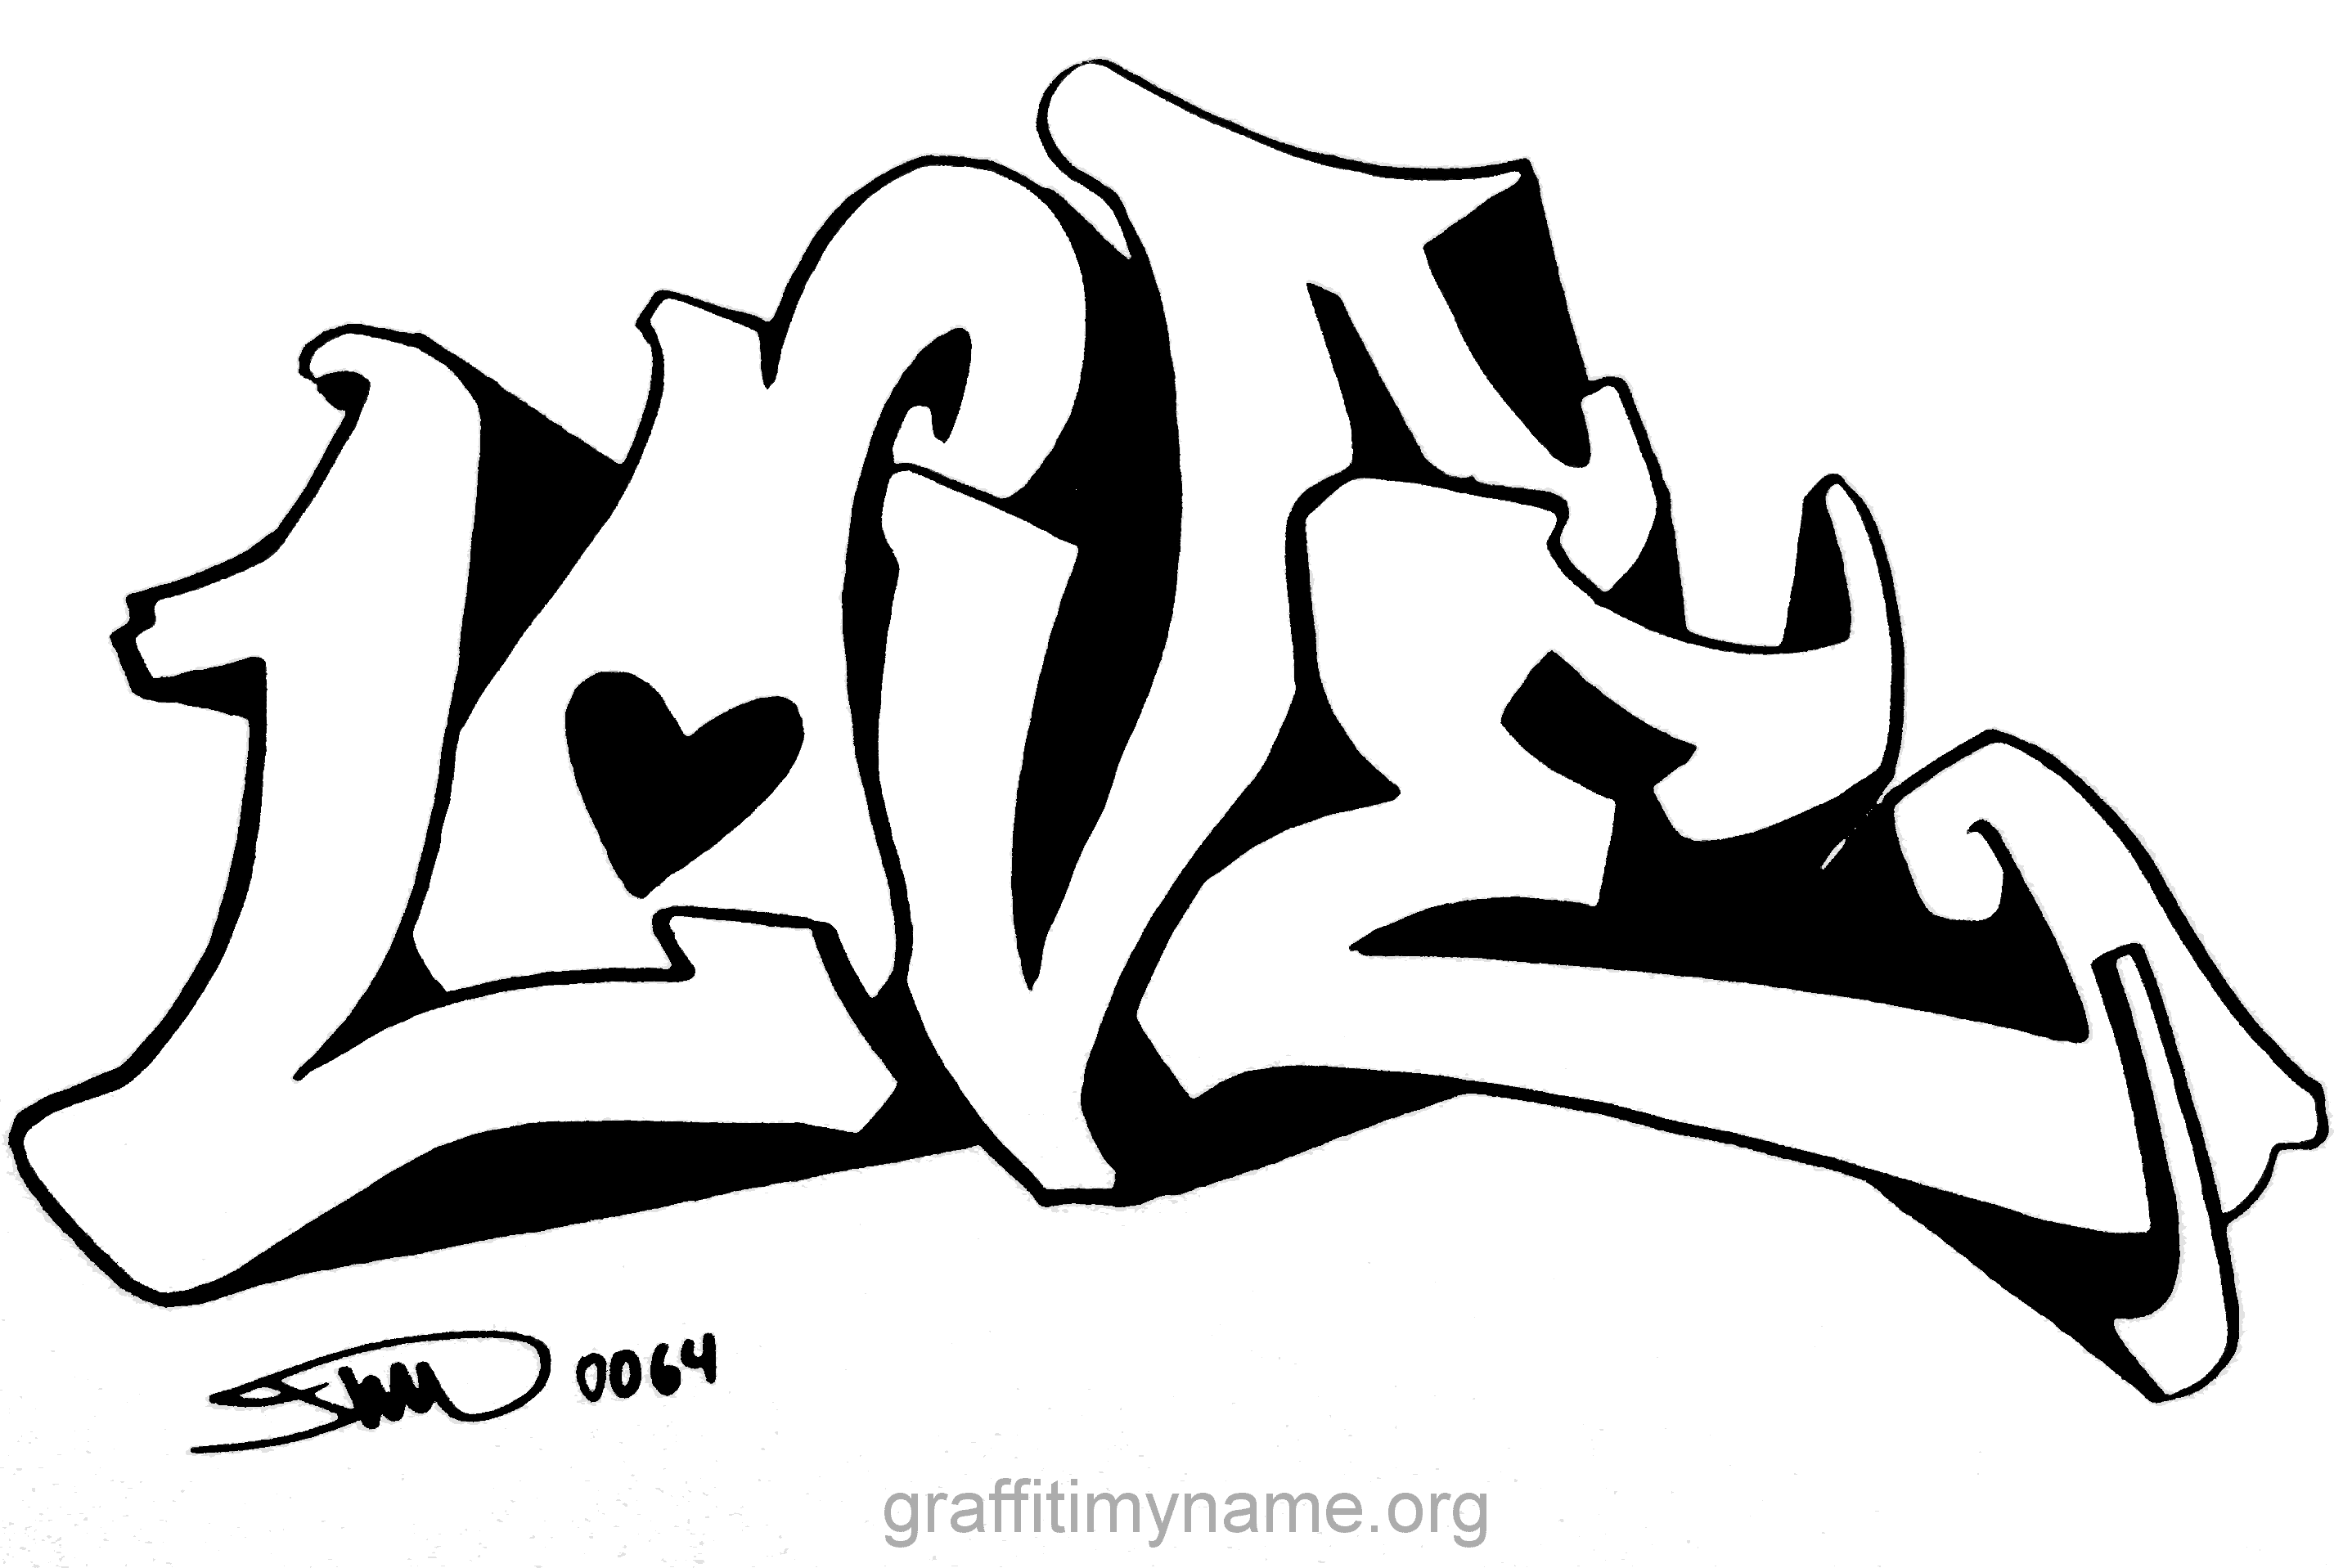 Amor em Graffiti para colorir